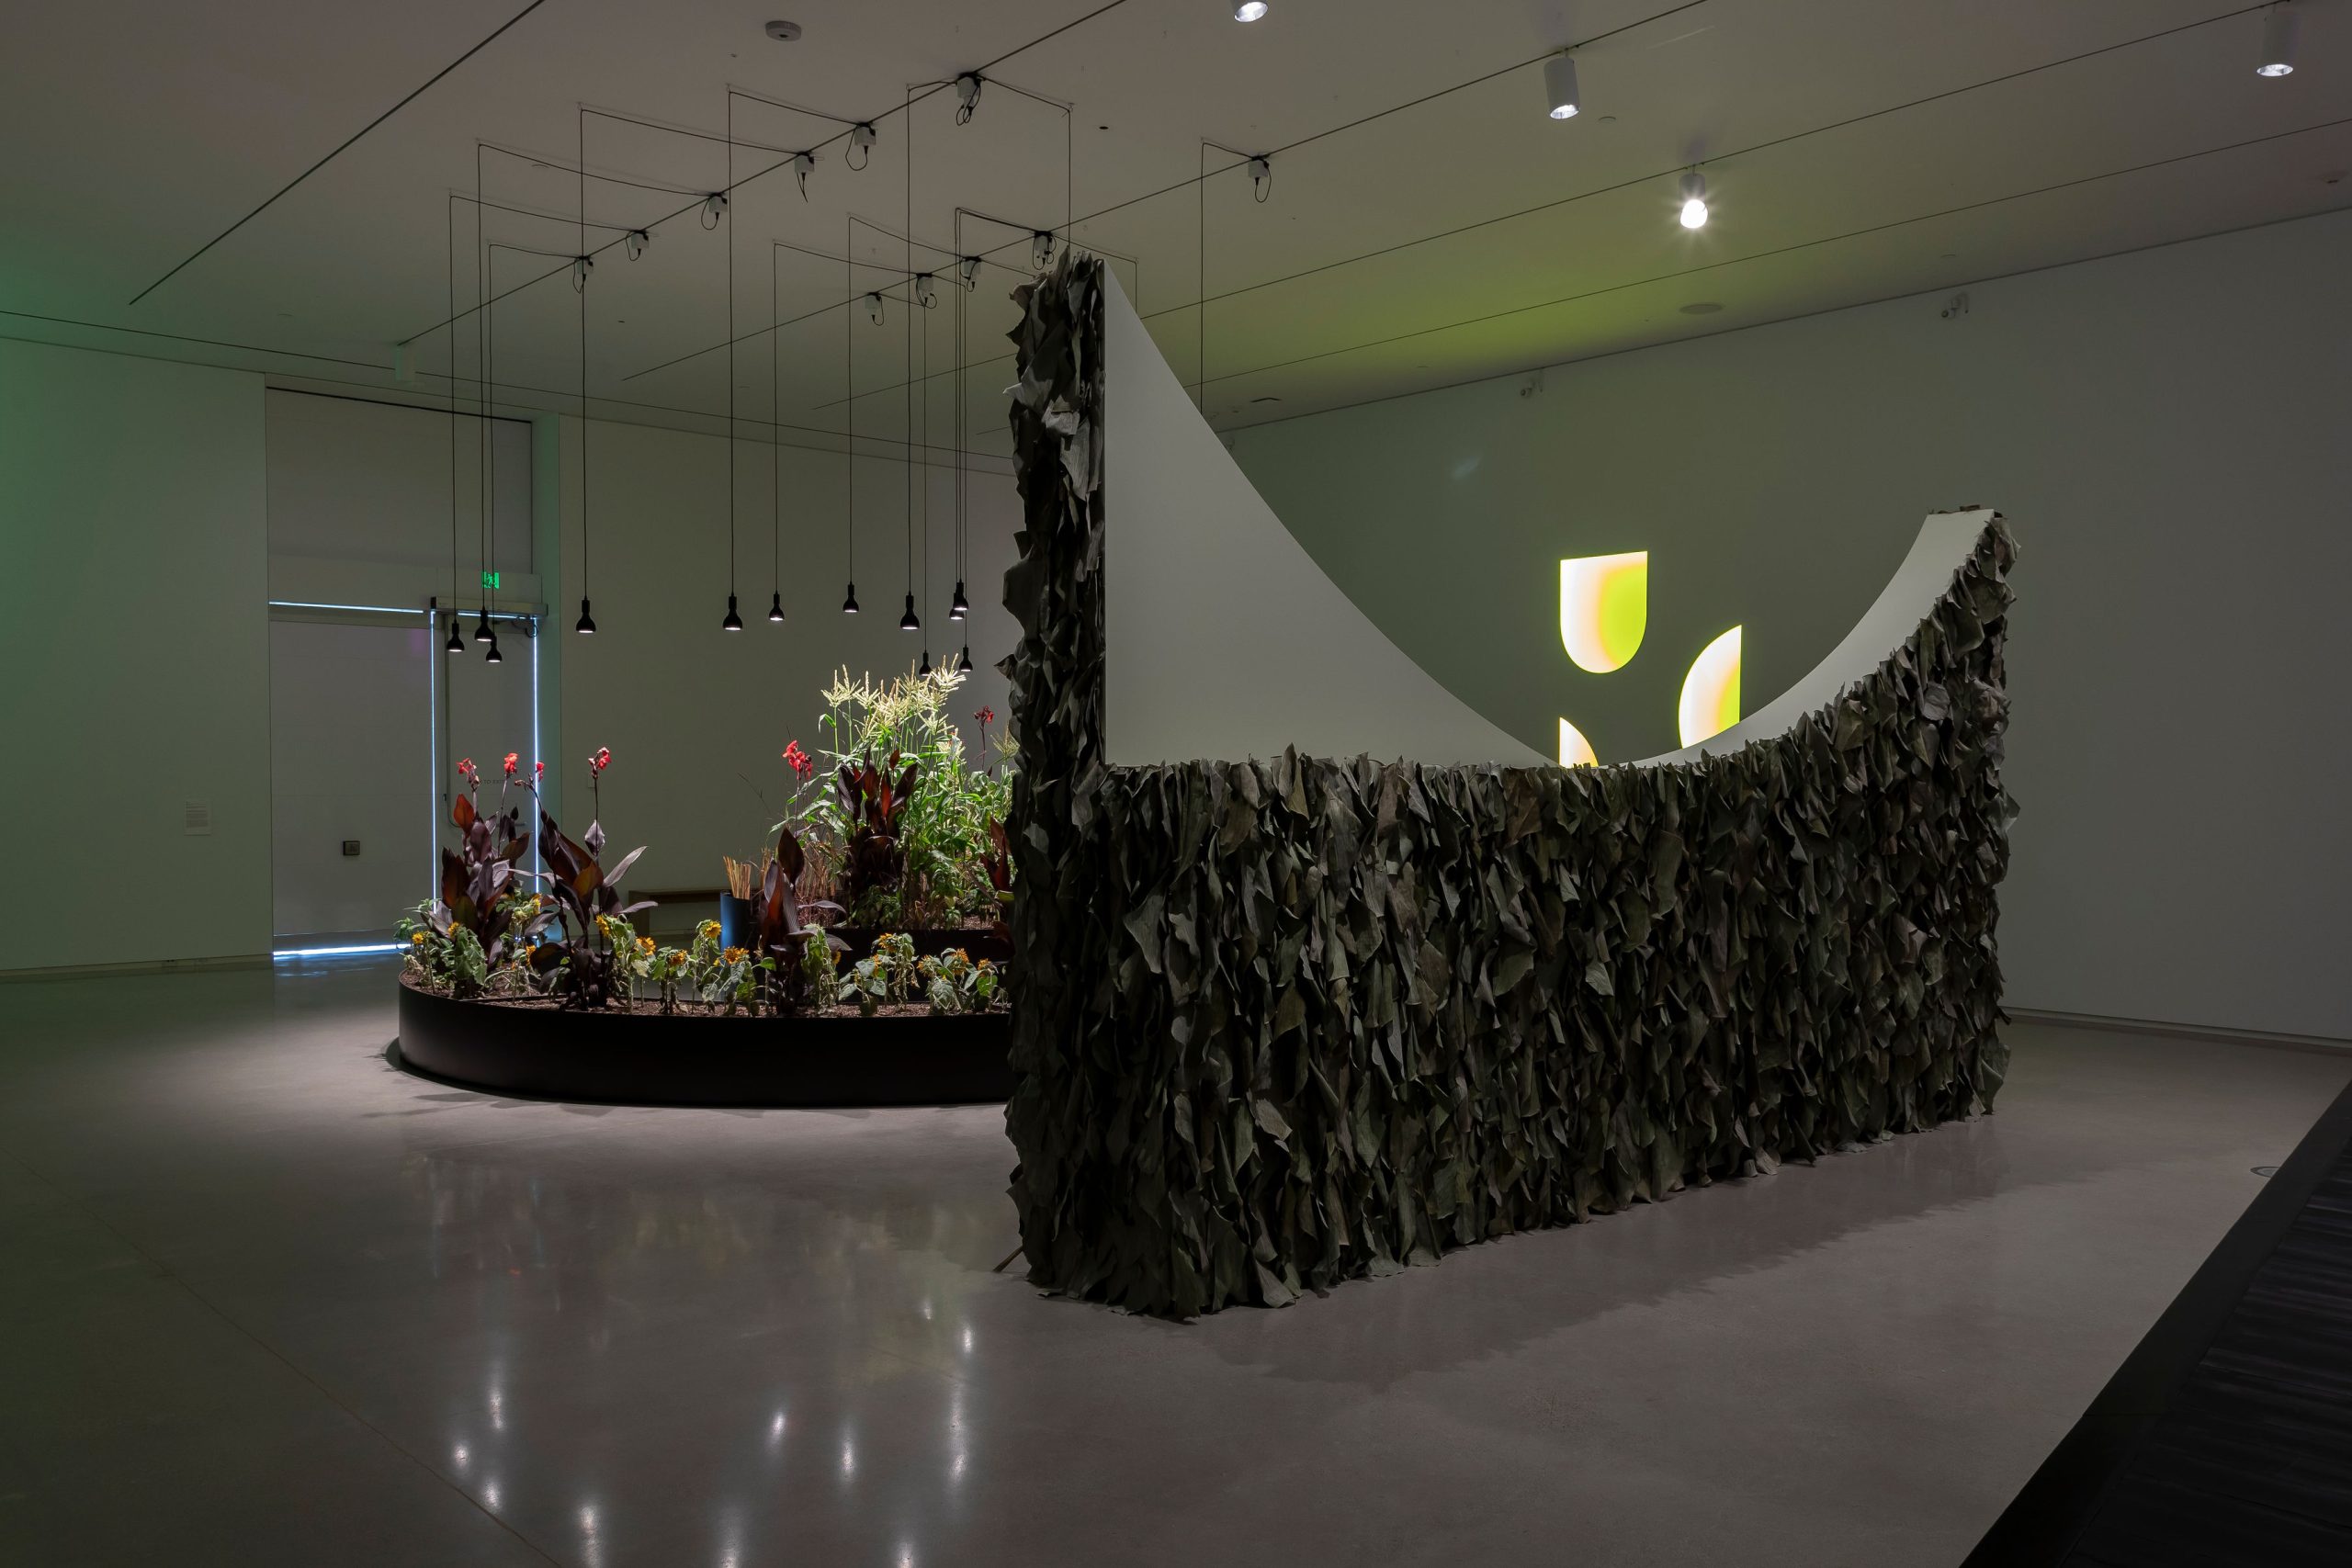 Kapwani Kiwanga: Remediation, installation view featuring a sculptural work with live plants. Photo: Carey Shaw